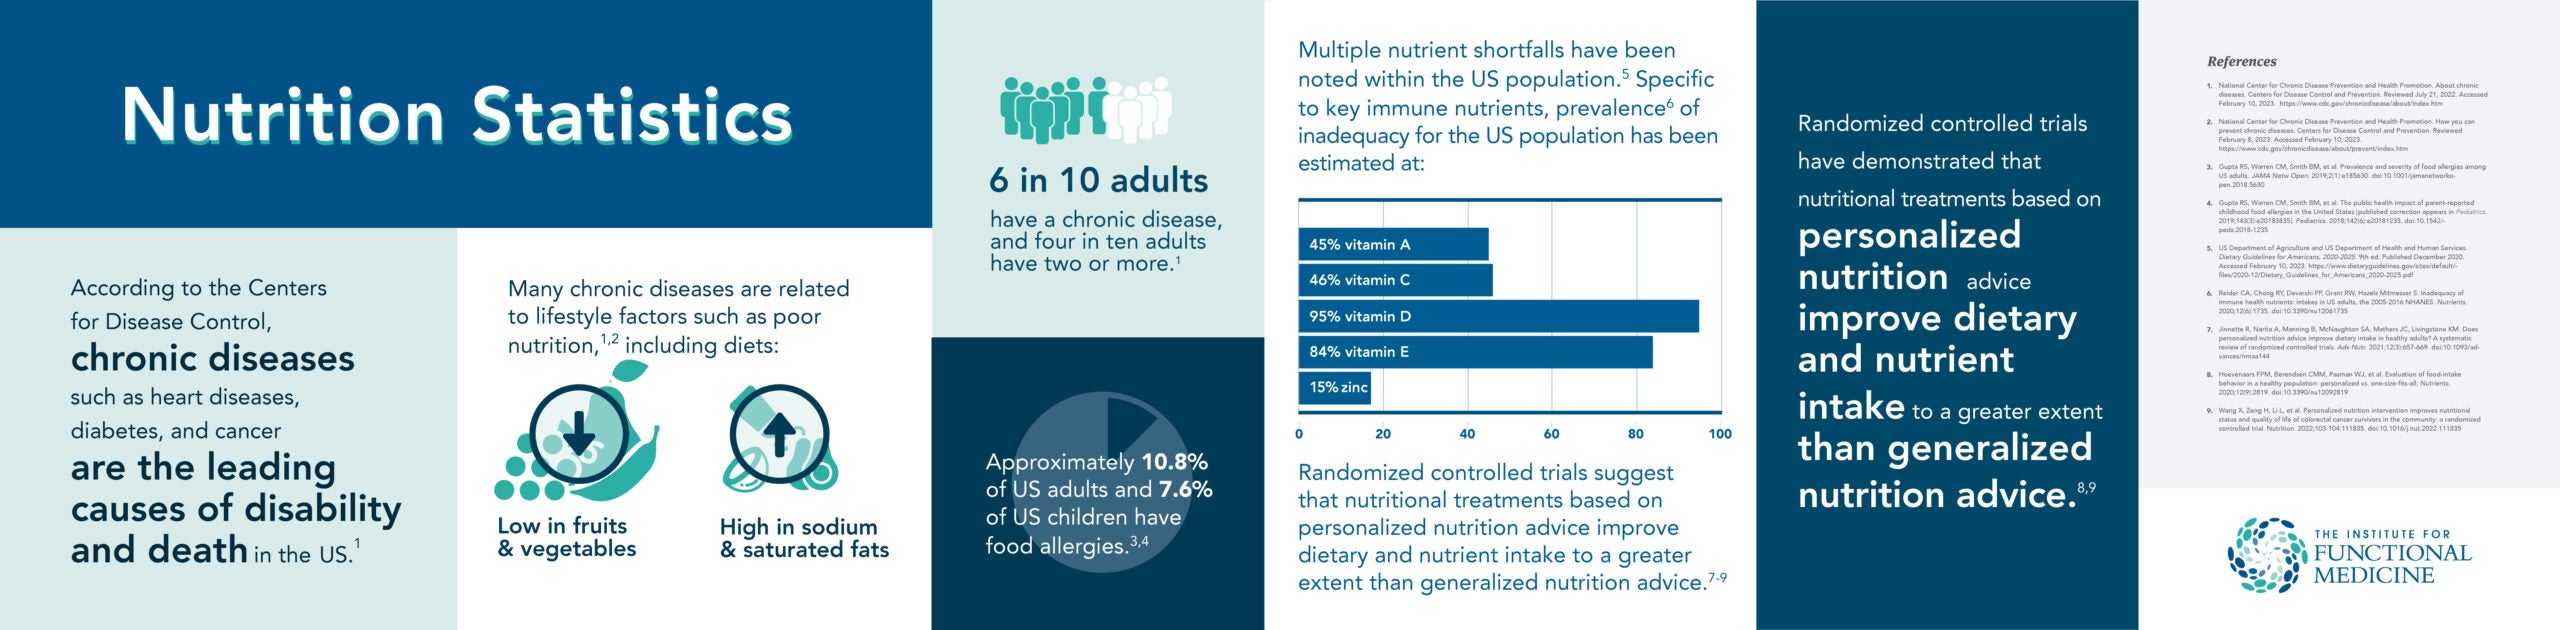 Nutrition Statistics TFP Infographic Horizontal (2)